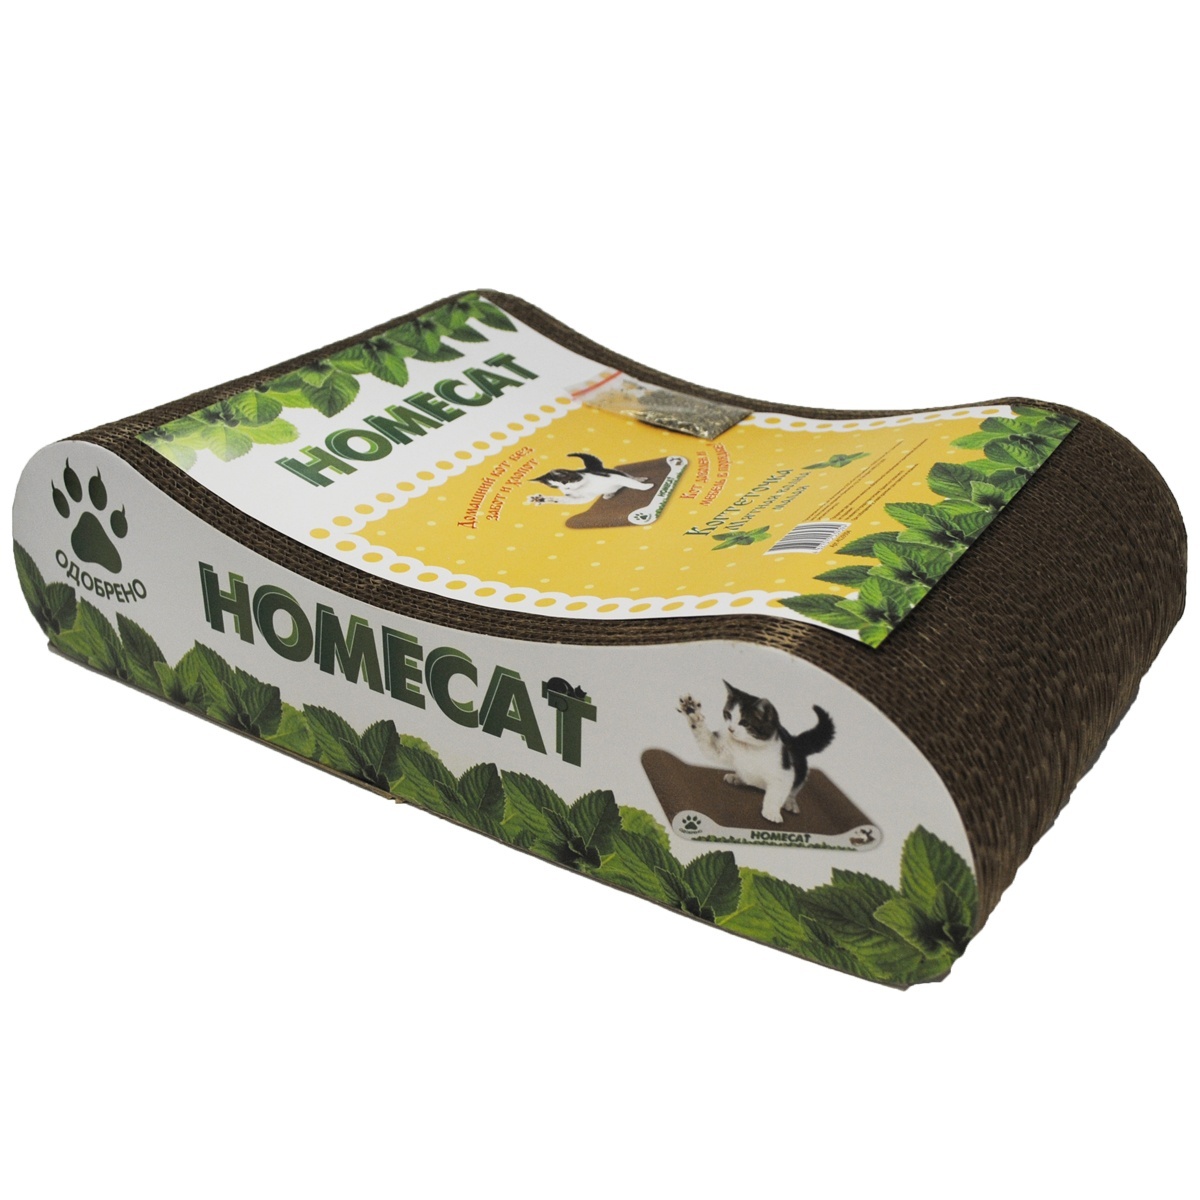 Homecat Homecat когтеточкаМятная волна, гофрокартон, 41х24х10 см (500 г) когтеточка homecat когтеточка гофрокартоная мятная волна штиль 0 баллов 47х22х4 см